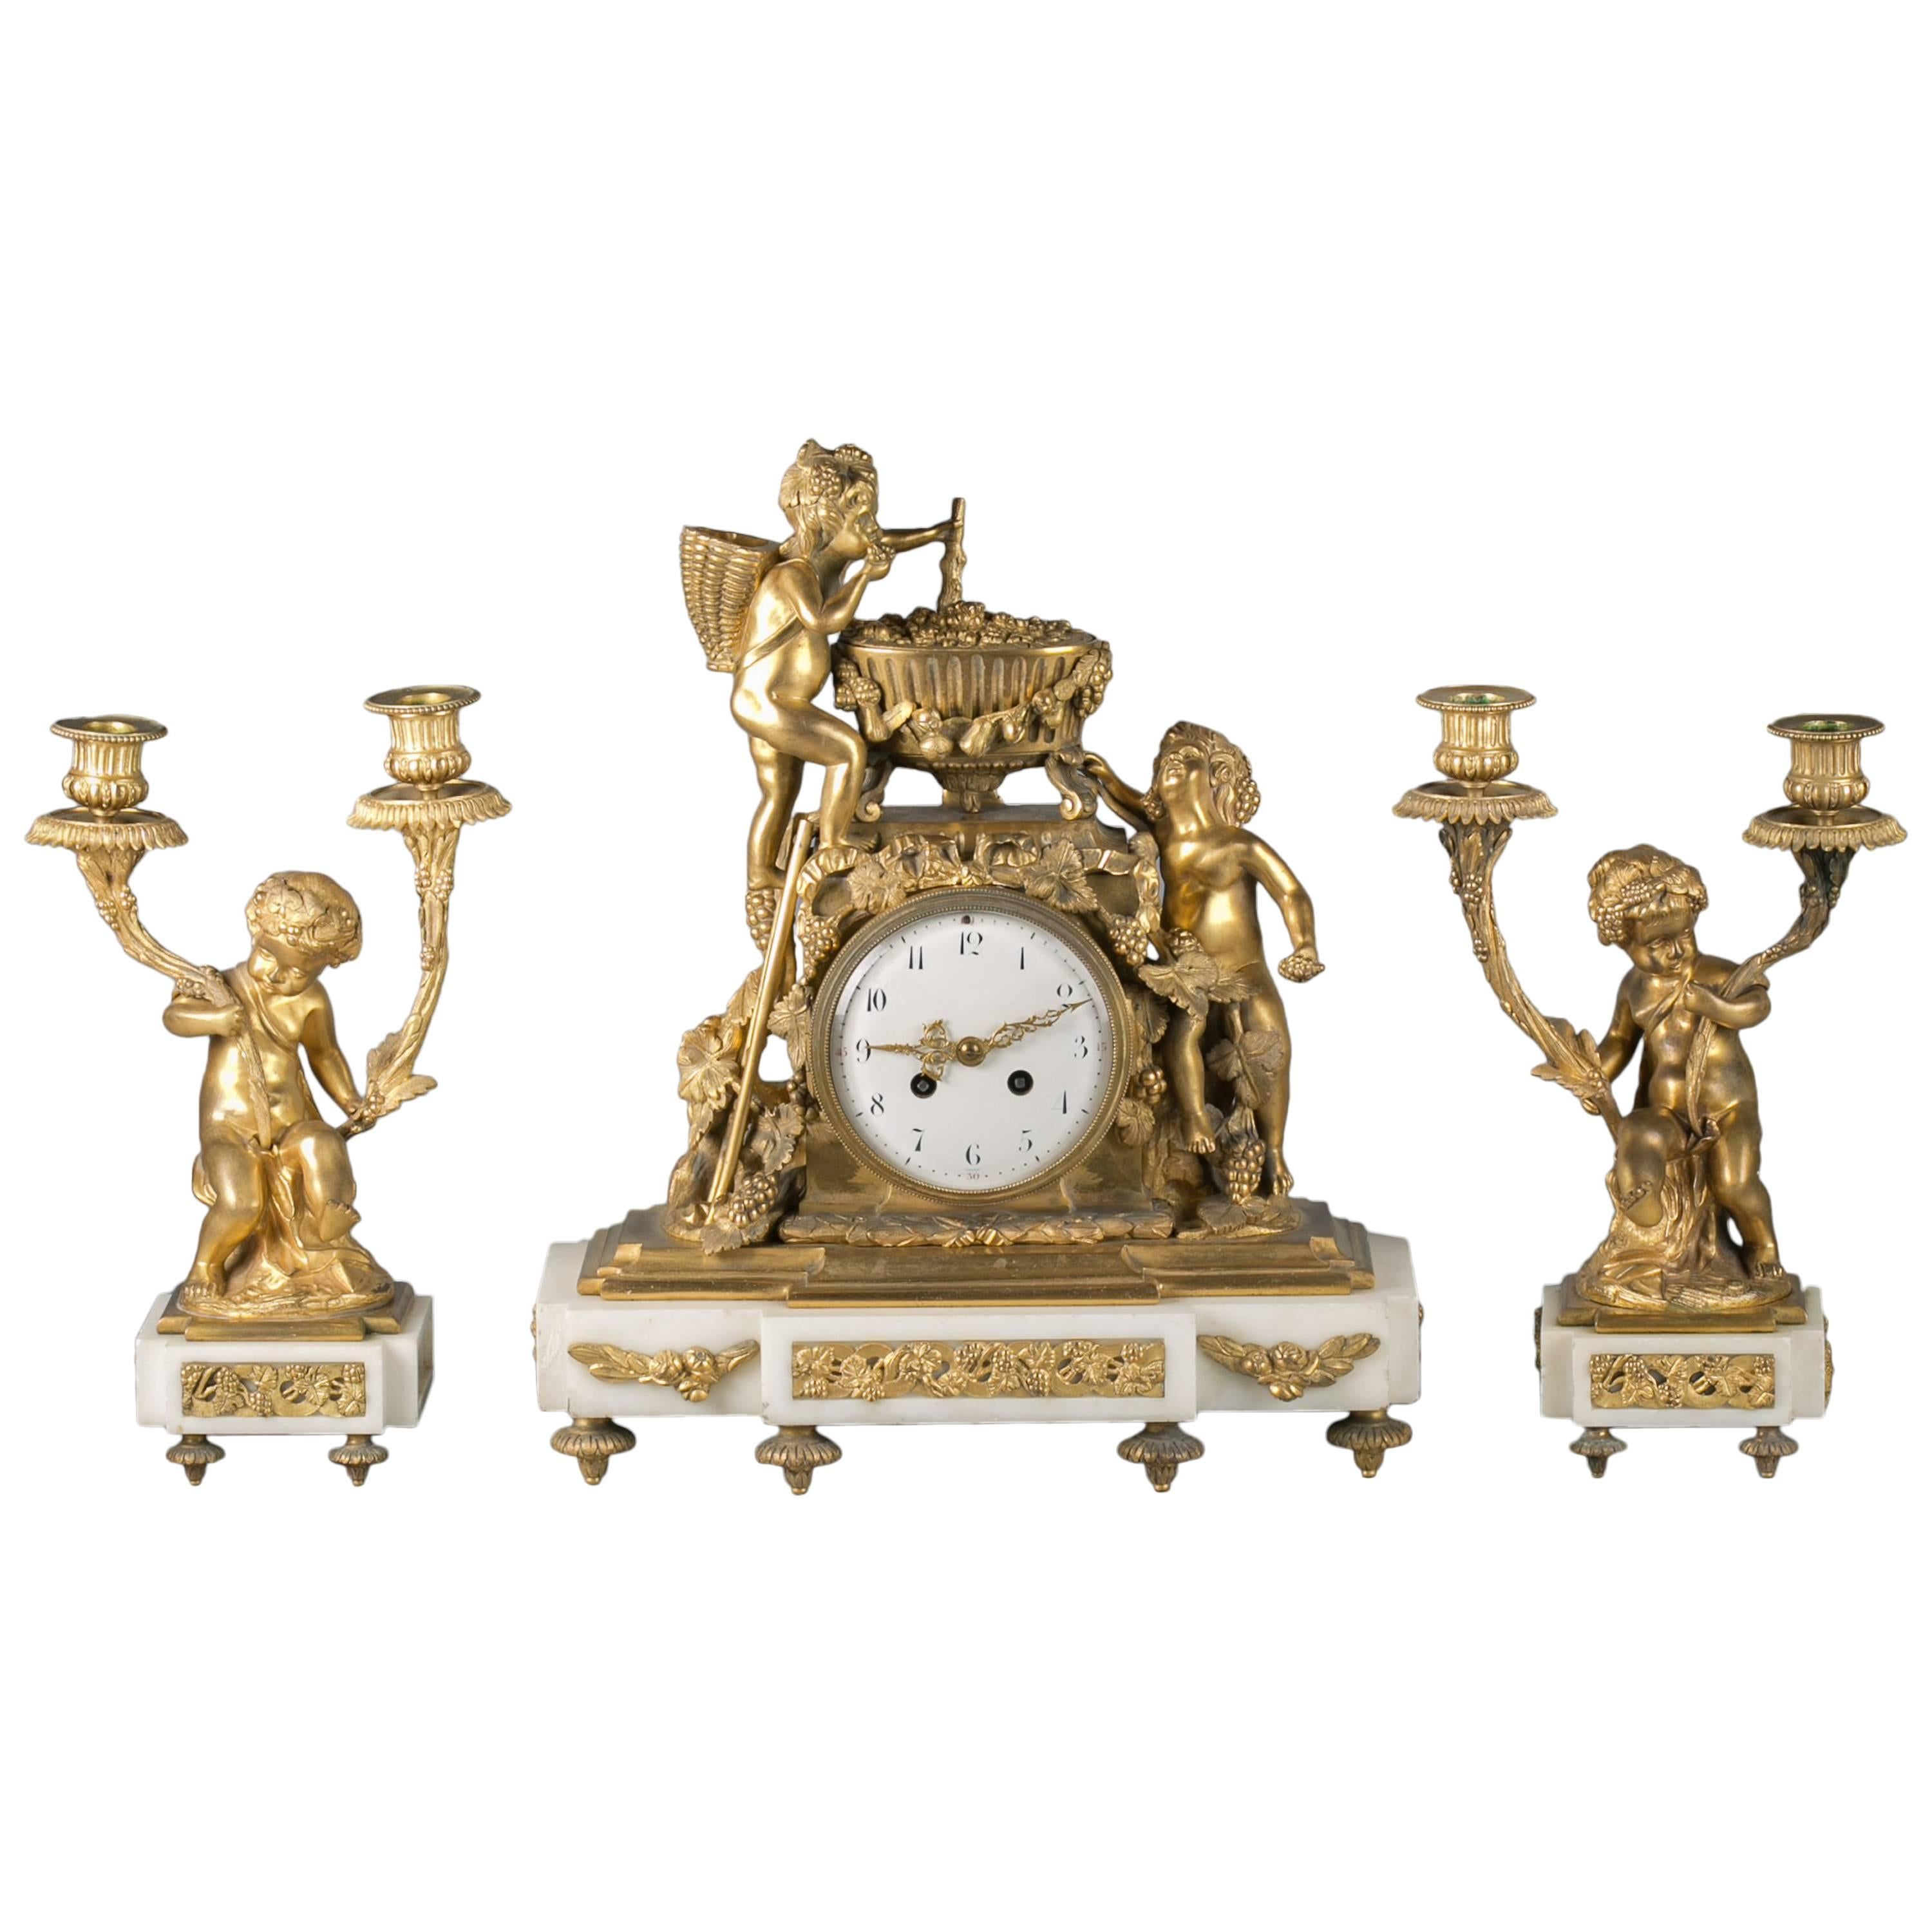 Three-Piece French Bronze and Marble Clock Garniture, circa 1875